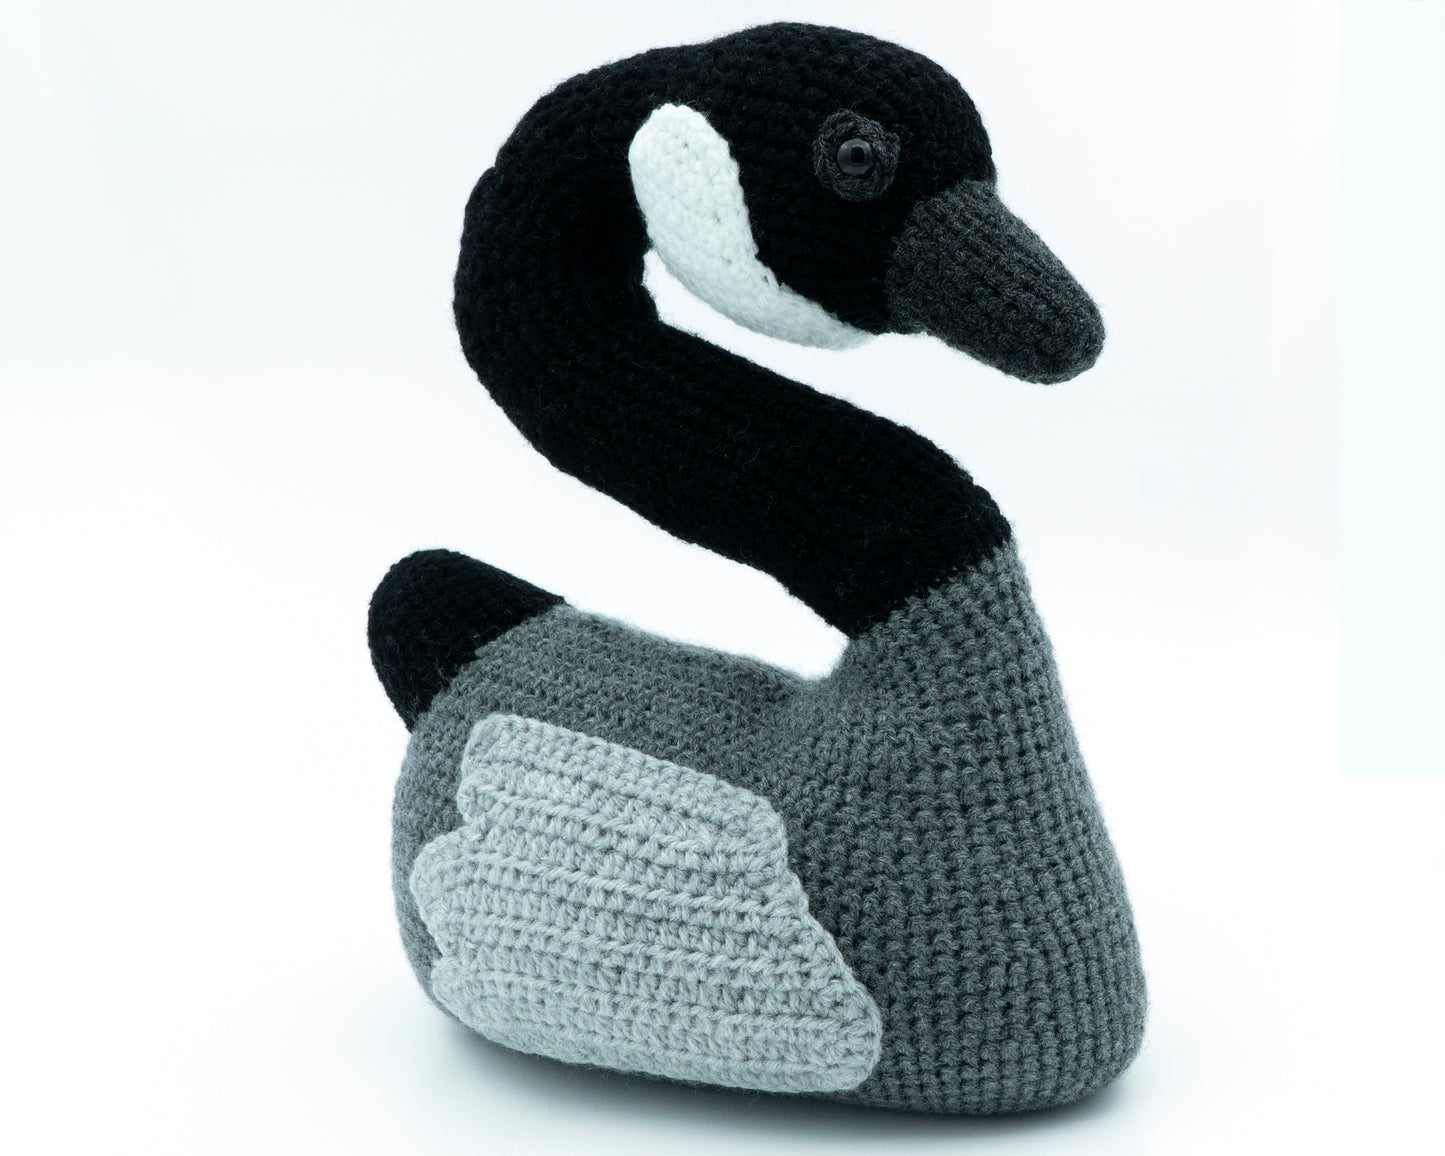 amigurumi crochet canada goose pattern three quarter view